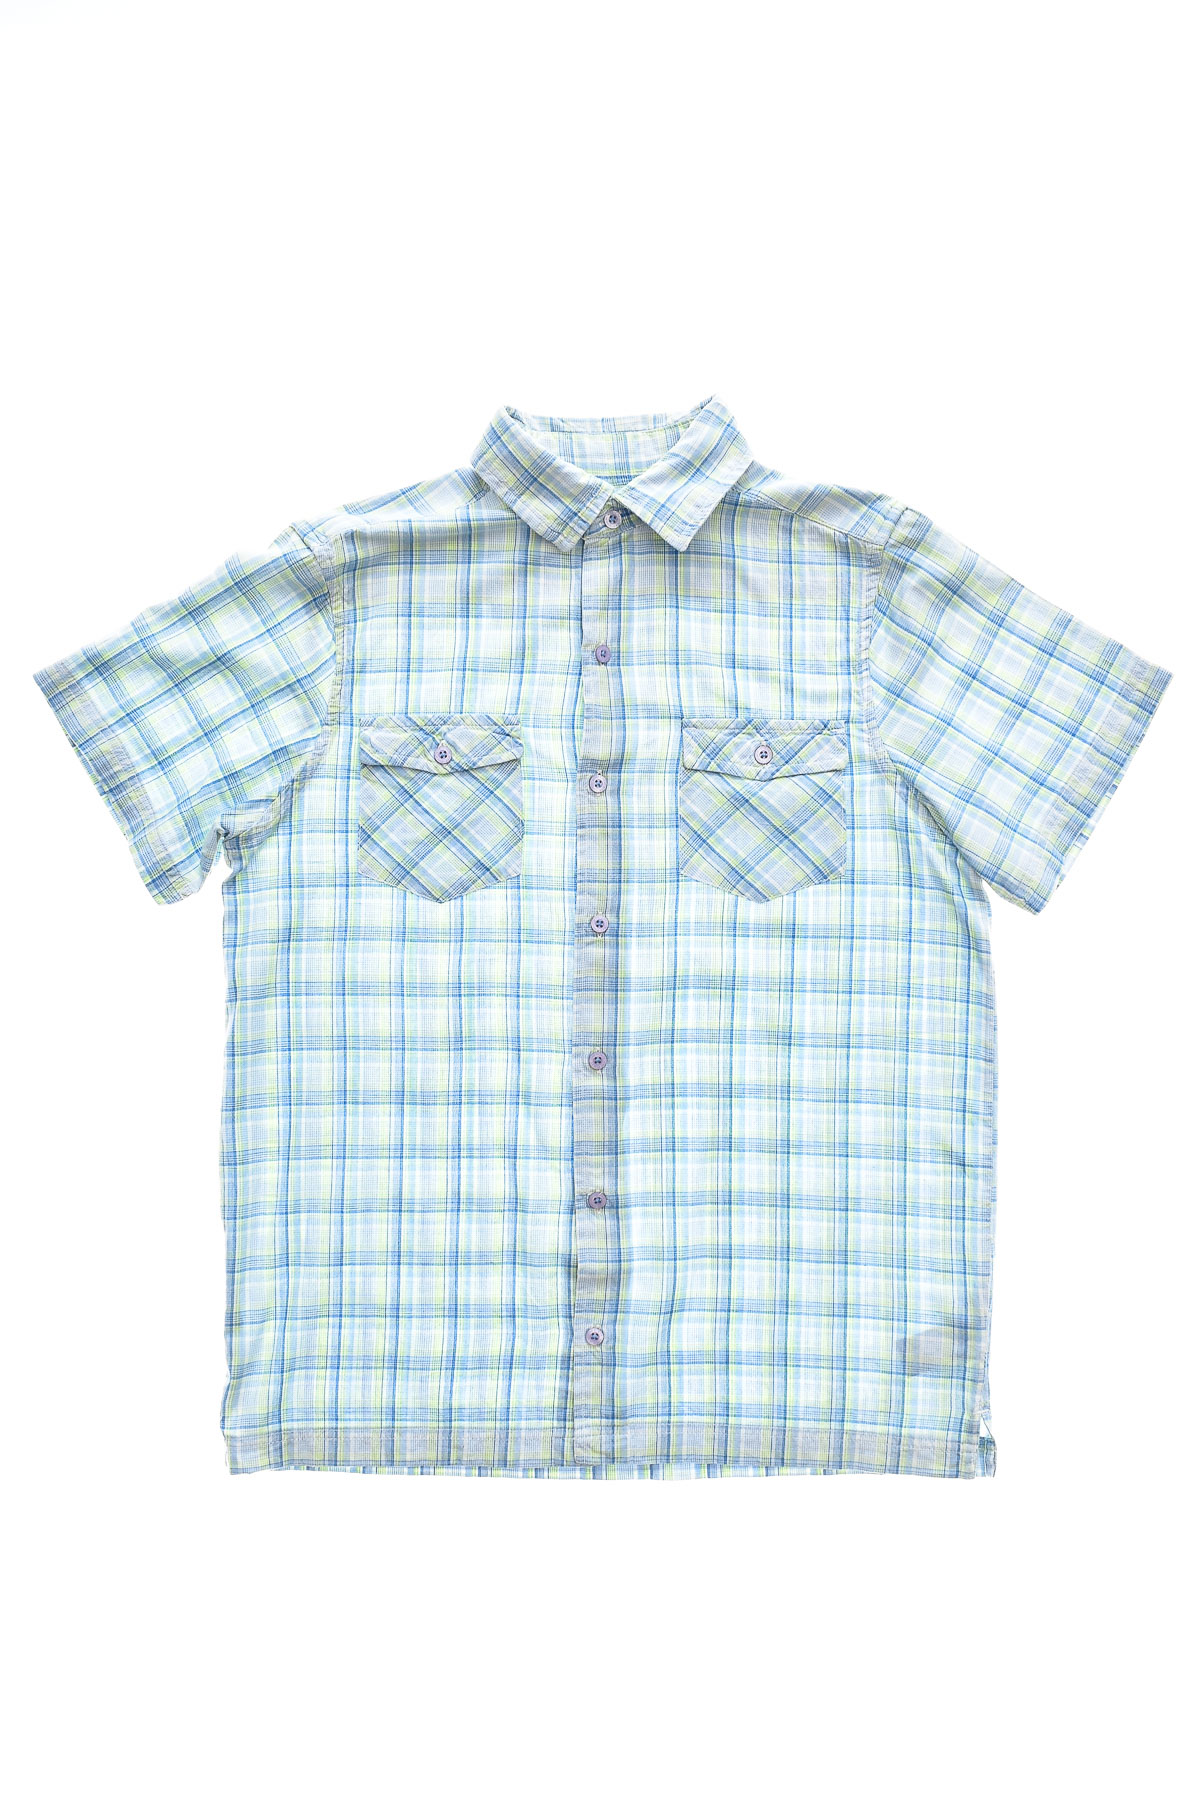 Men's shirt - CHEROKEE - 0